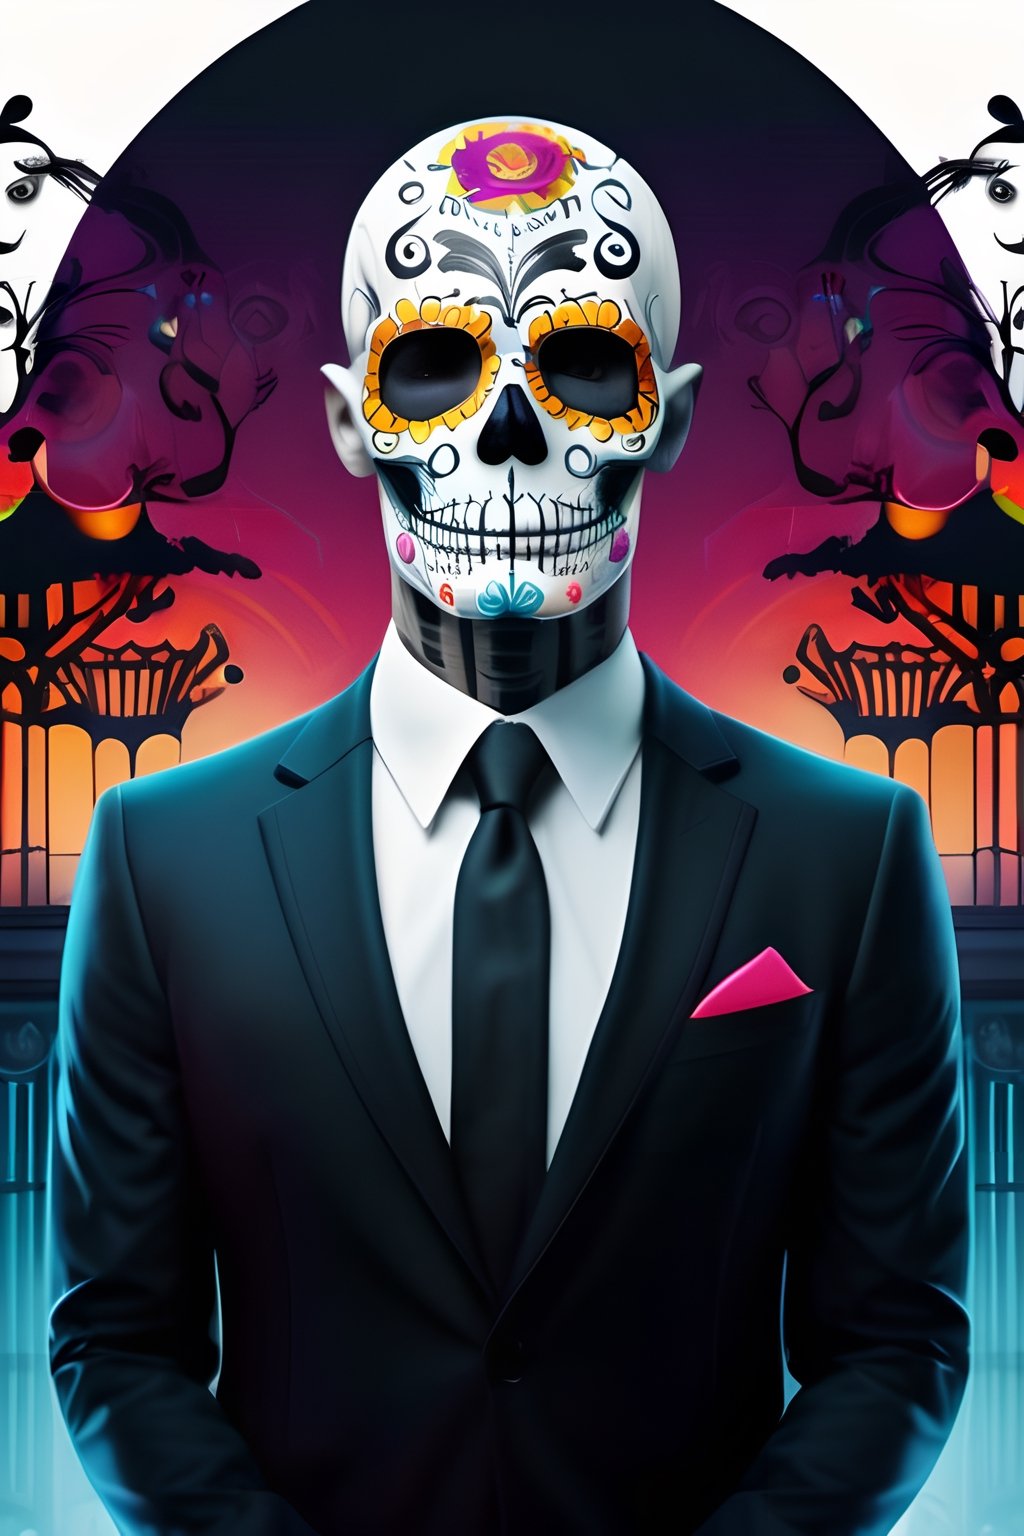 high detail, colorful, sugar skull man, white thin bald man, hitman style, night atmosphere at Halloween